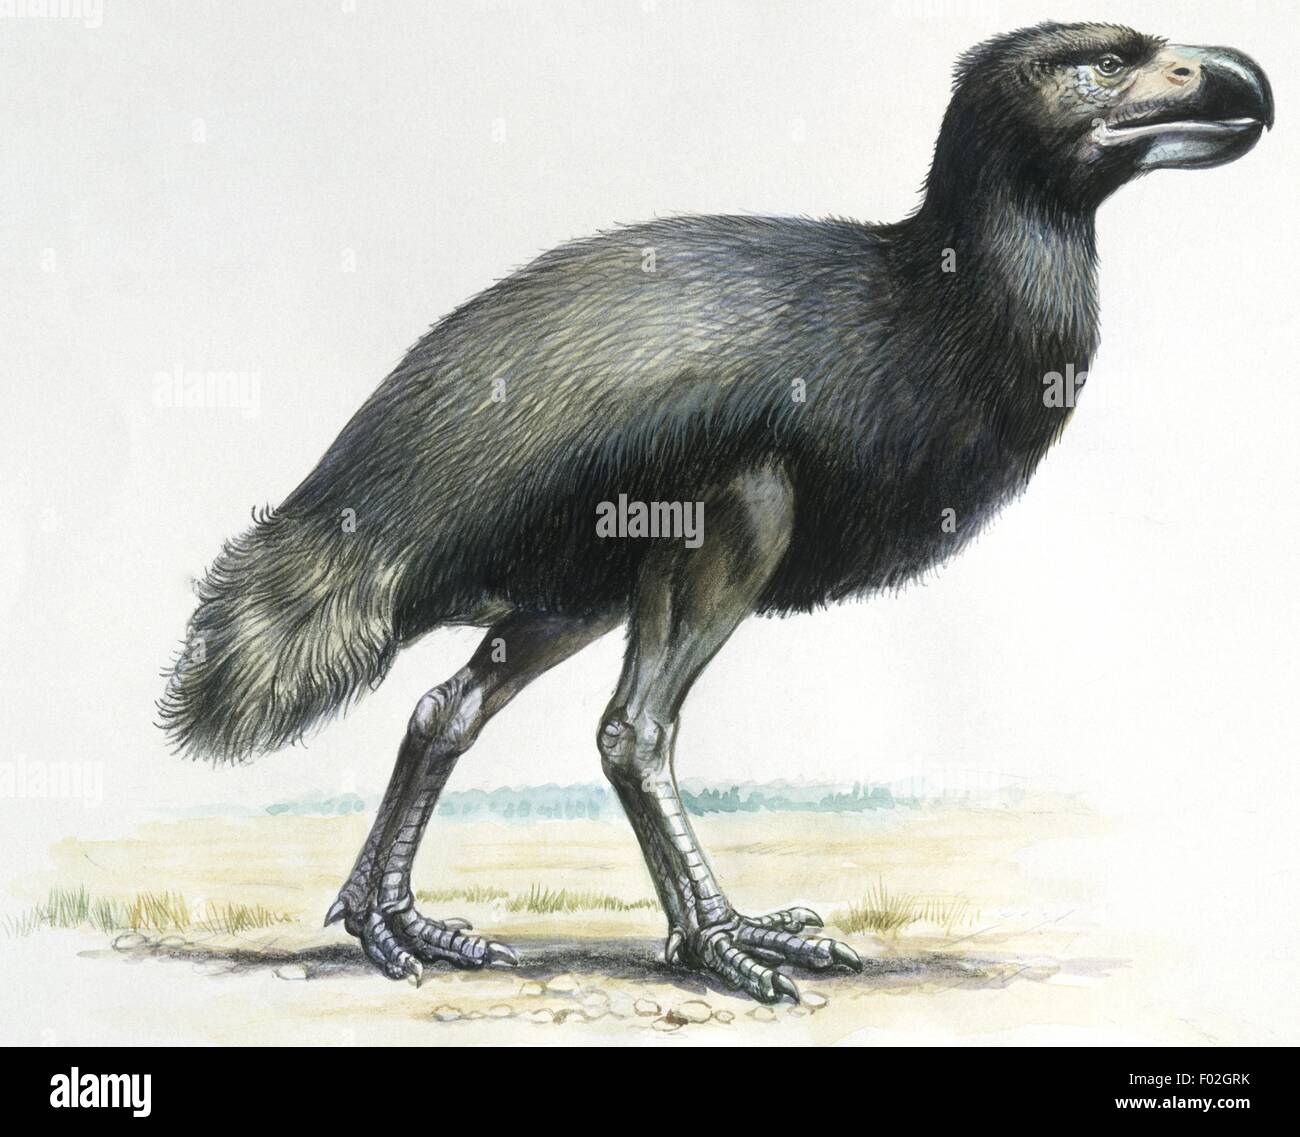 Prehistoric birds, Cenozoic era (Paleocene, Oligocene), Dyatrima, illustration Stock Photo